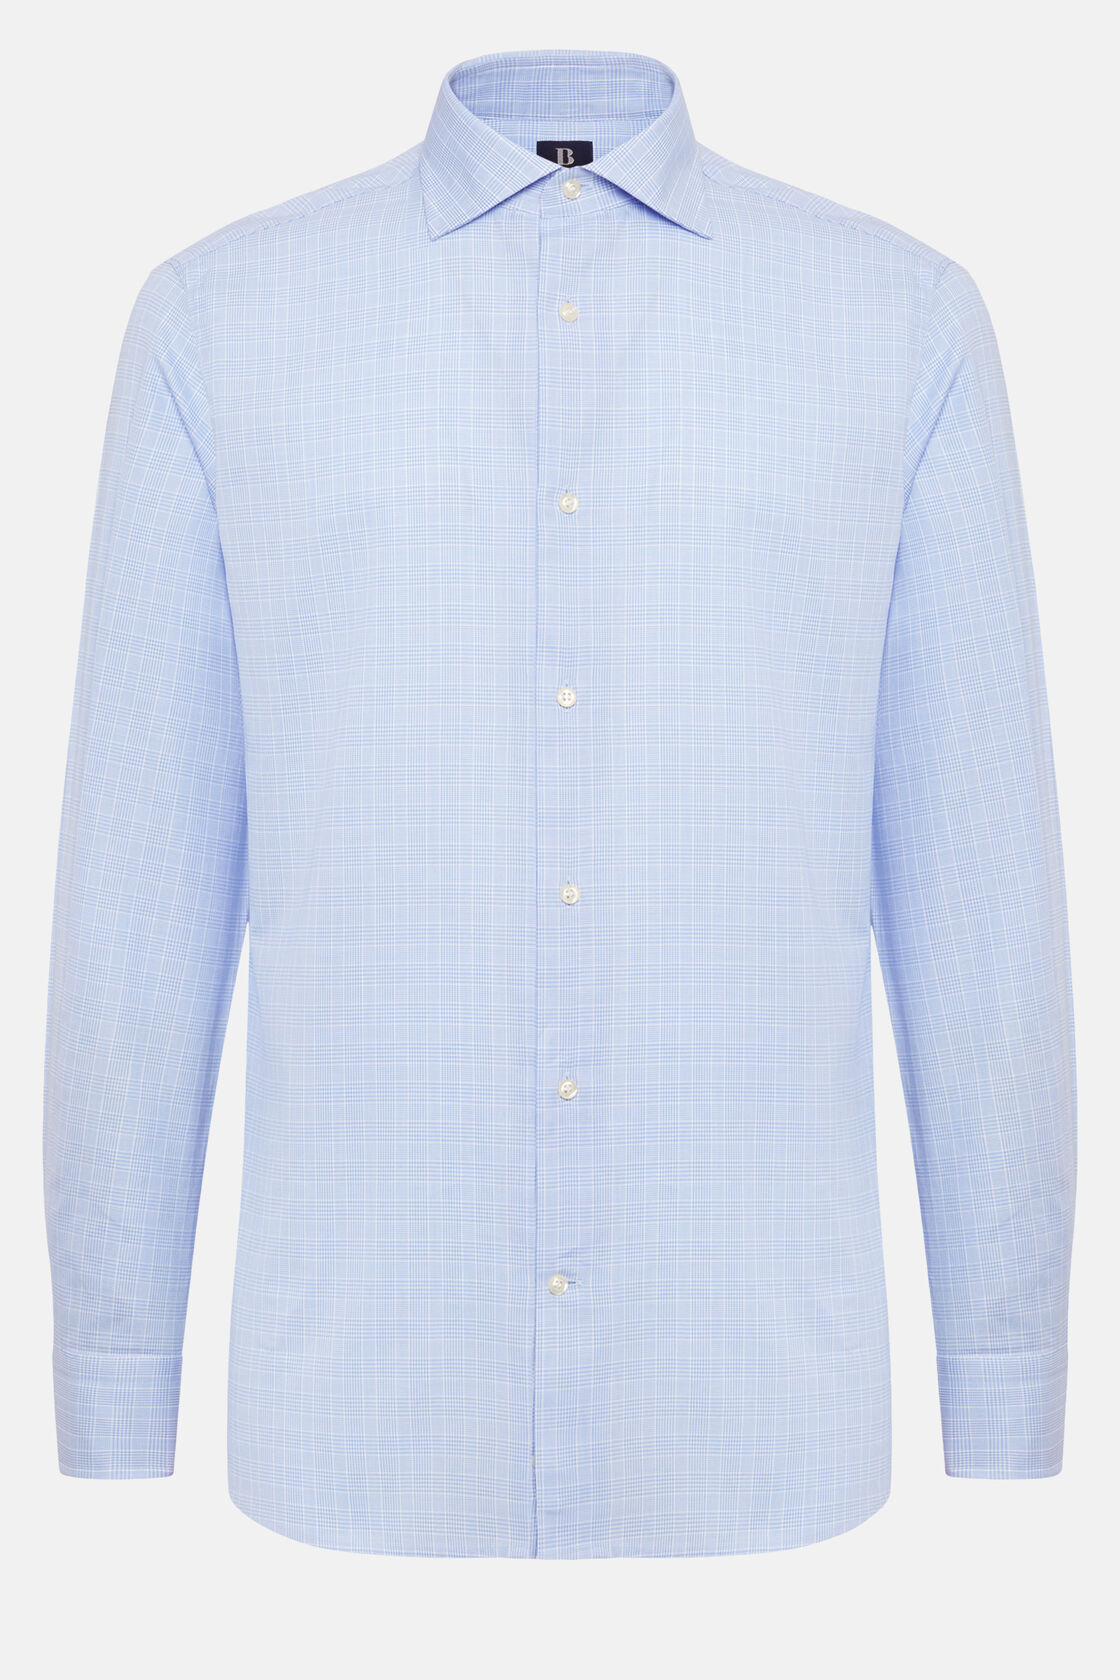 Twill Windsor Collar Shirt Regular Fit, Light Blue, hi-res